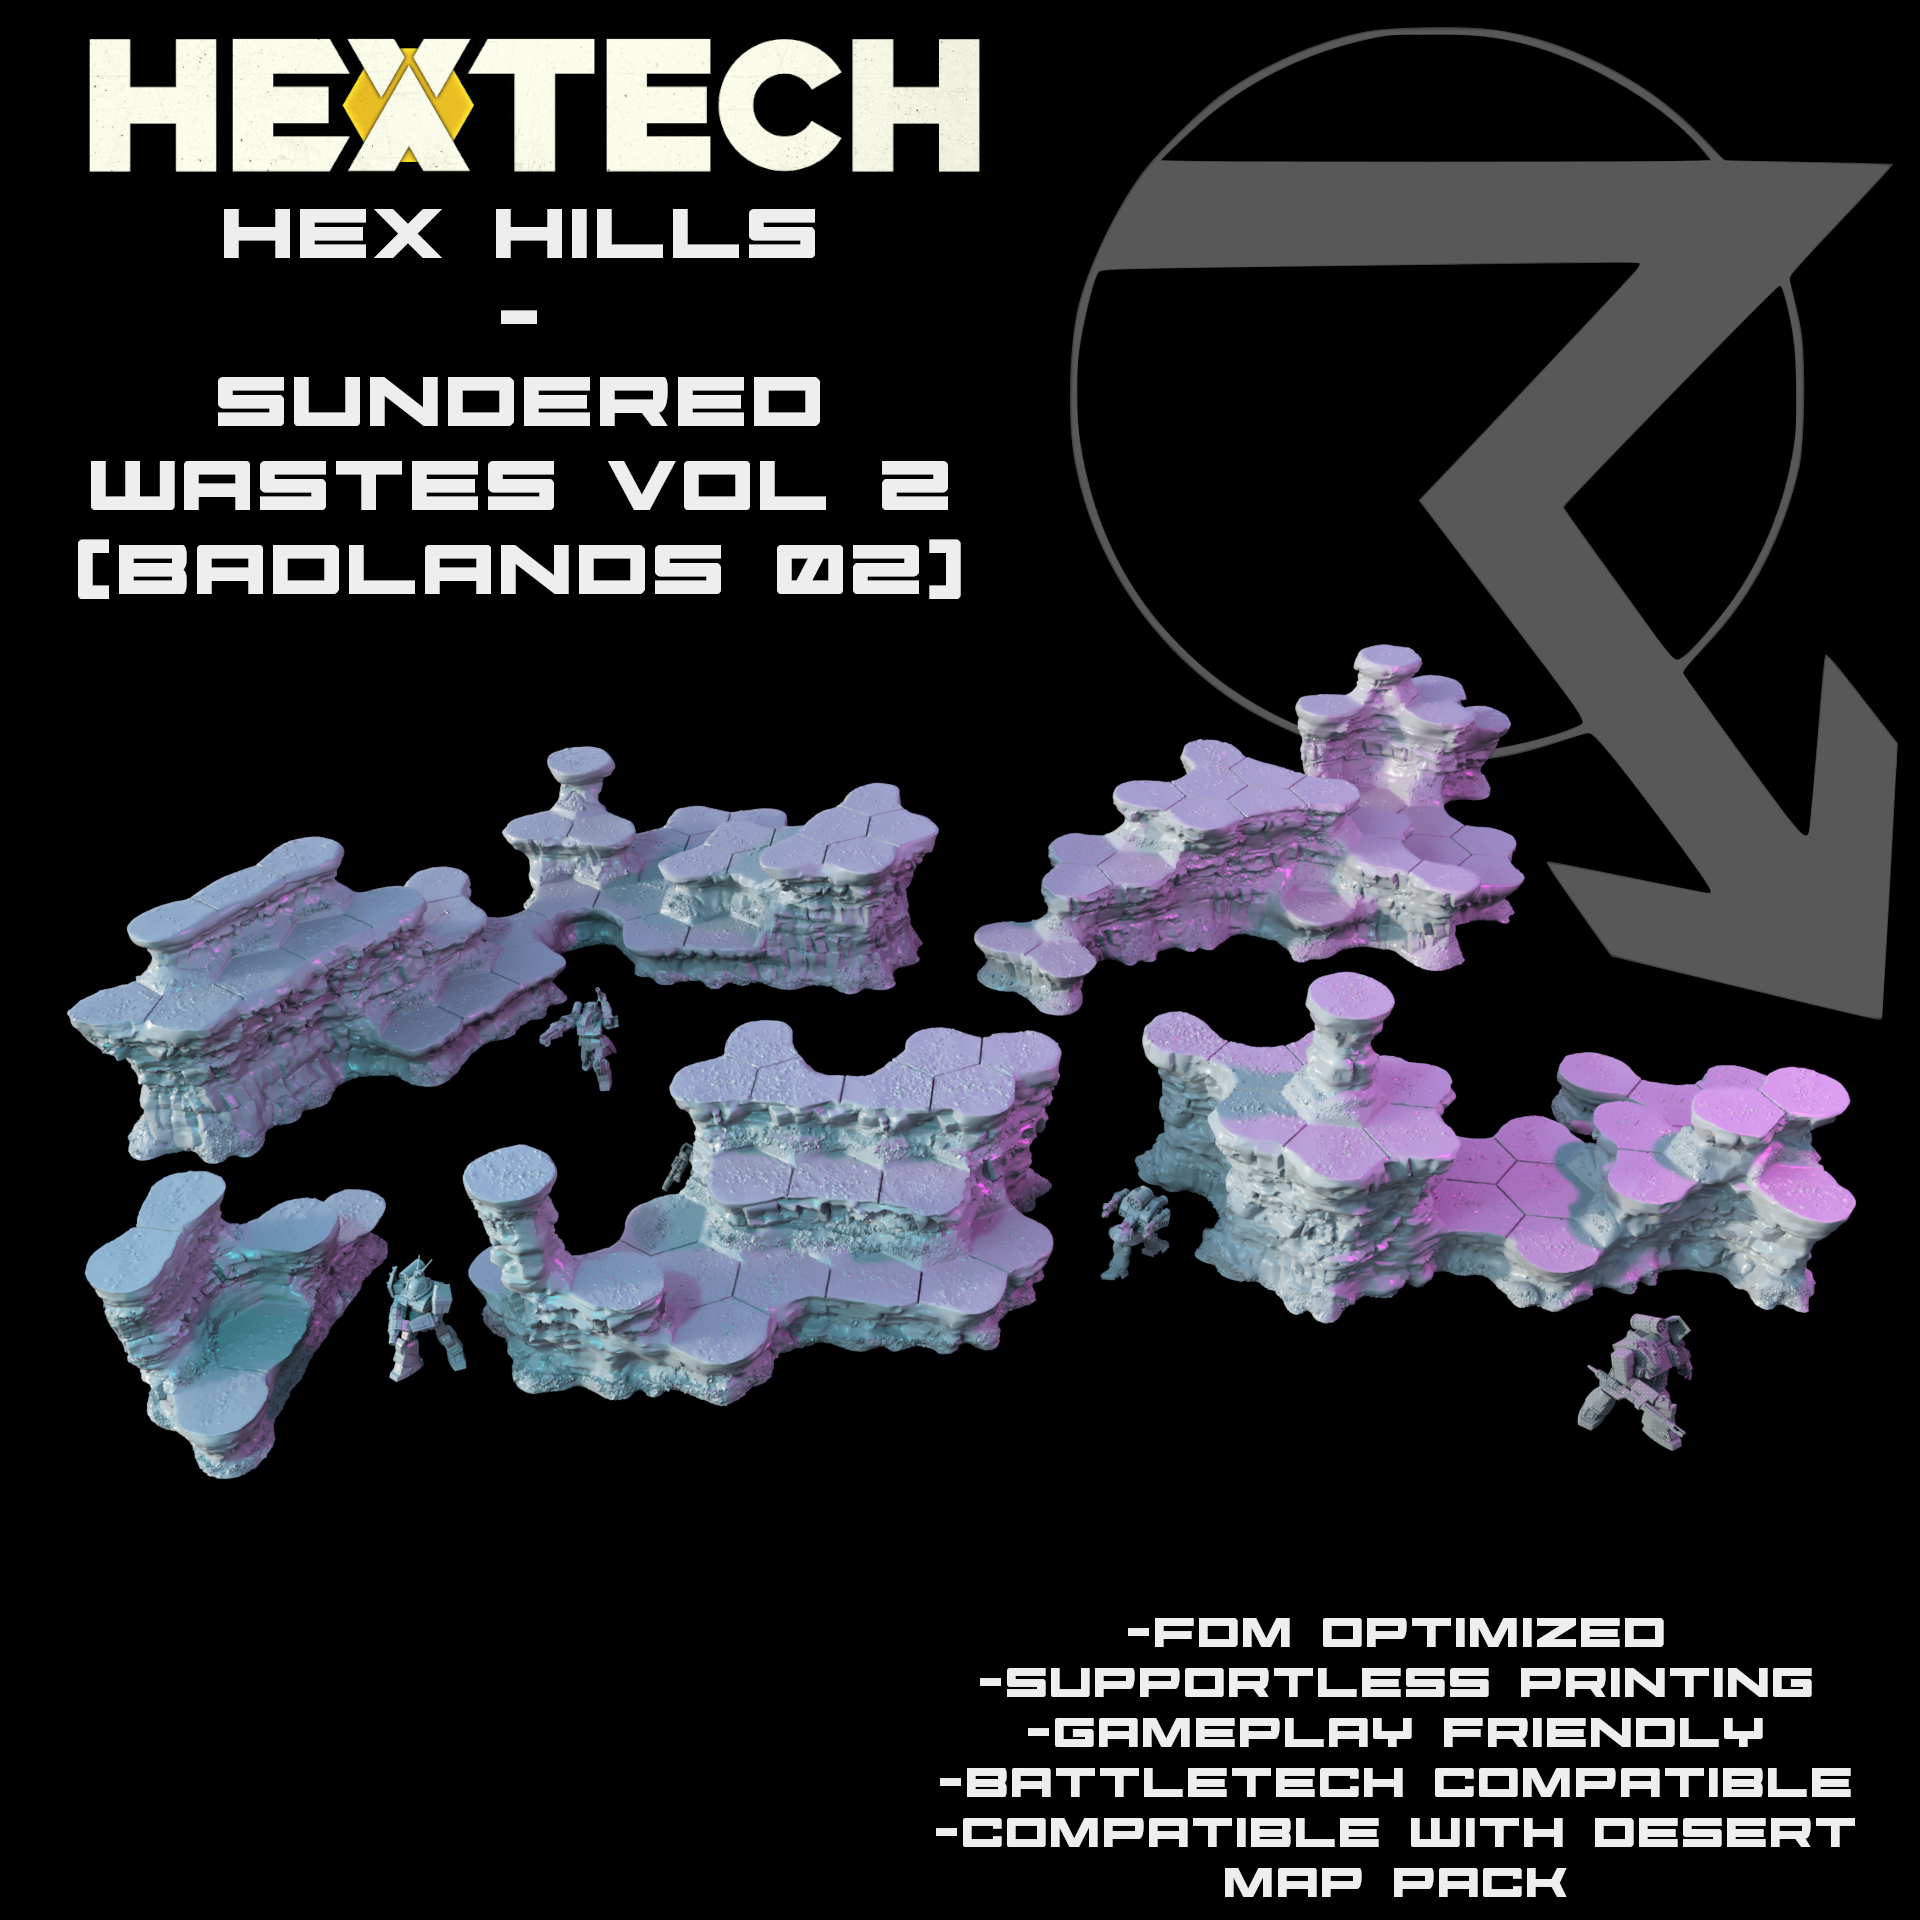 HEXTECH Sundered Wastes Vol 2 Bundle for Battletech